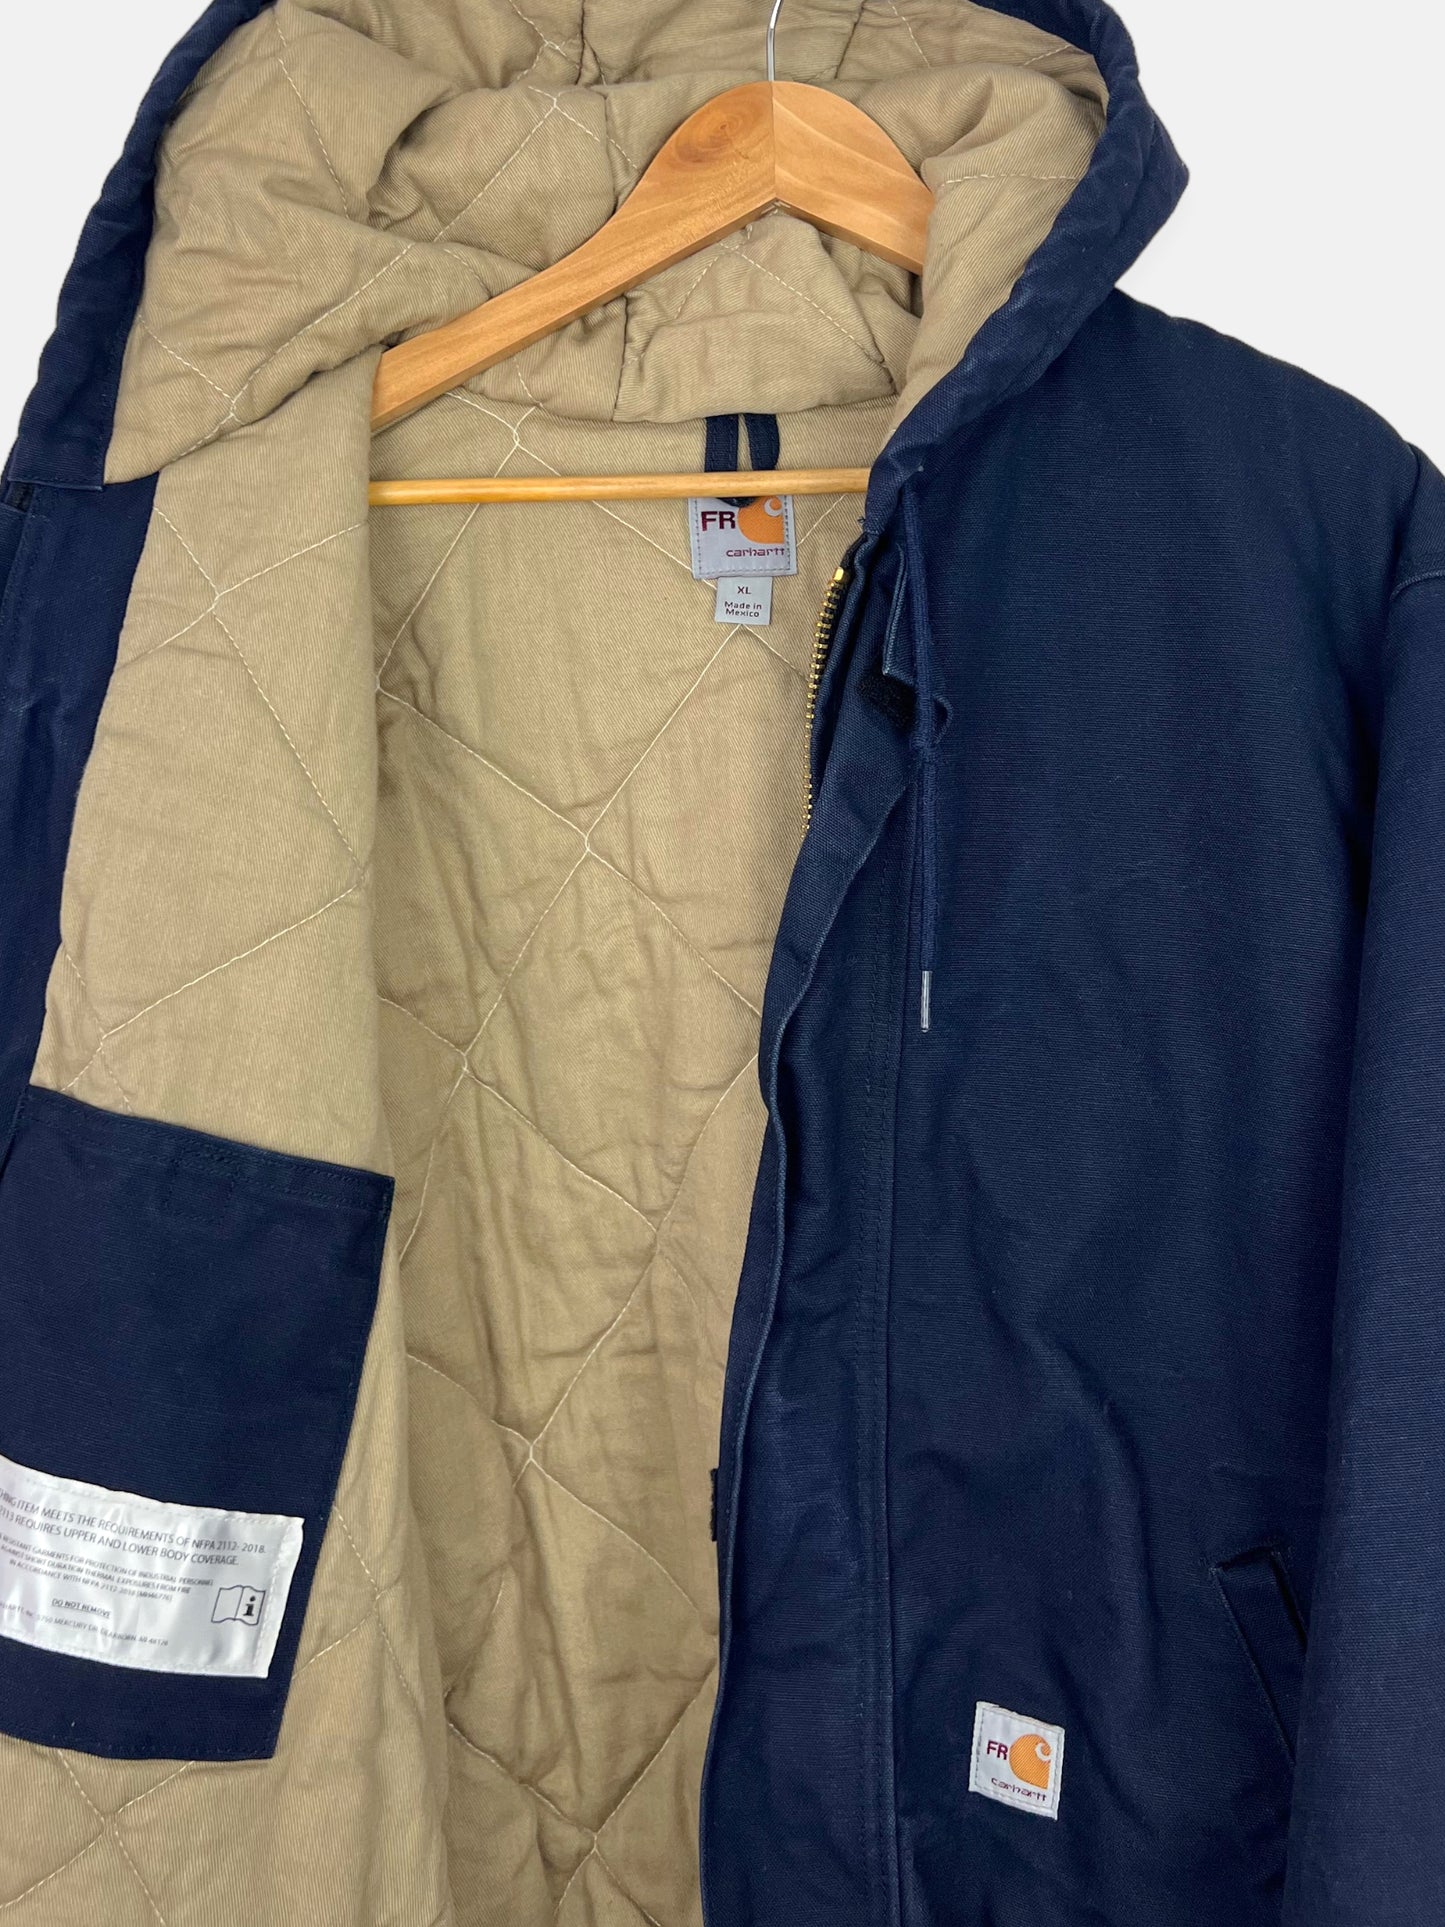 90's Carhartt Heavyweight Vintage Jacket with Hood Size XL